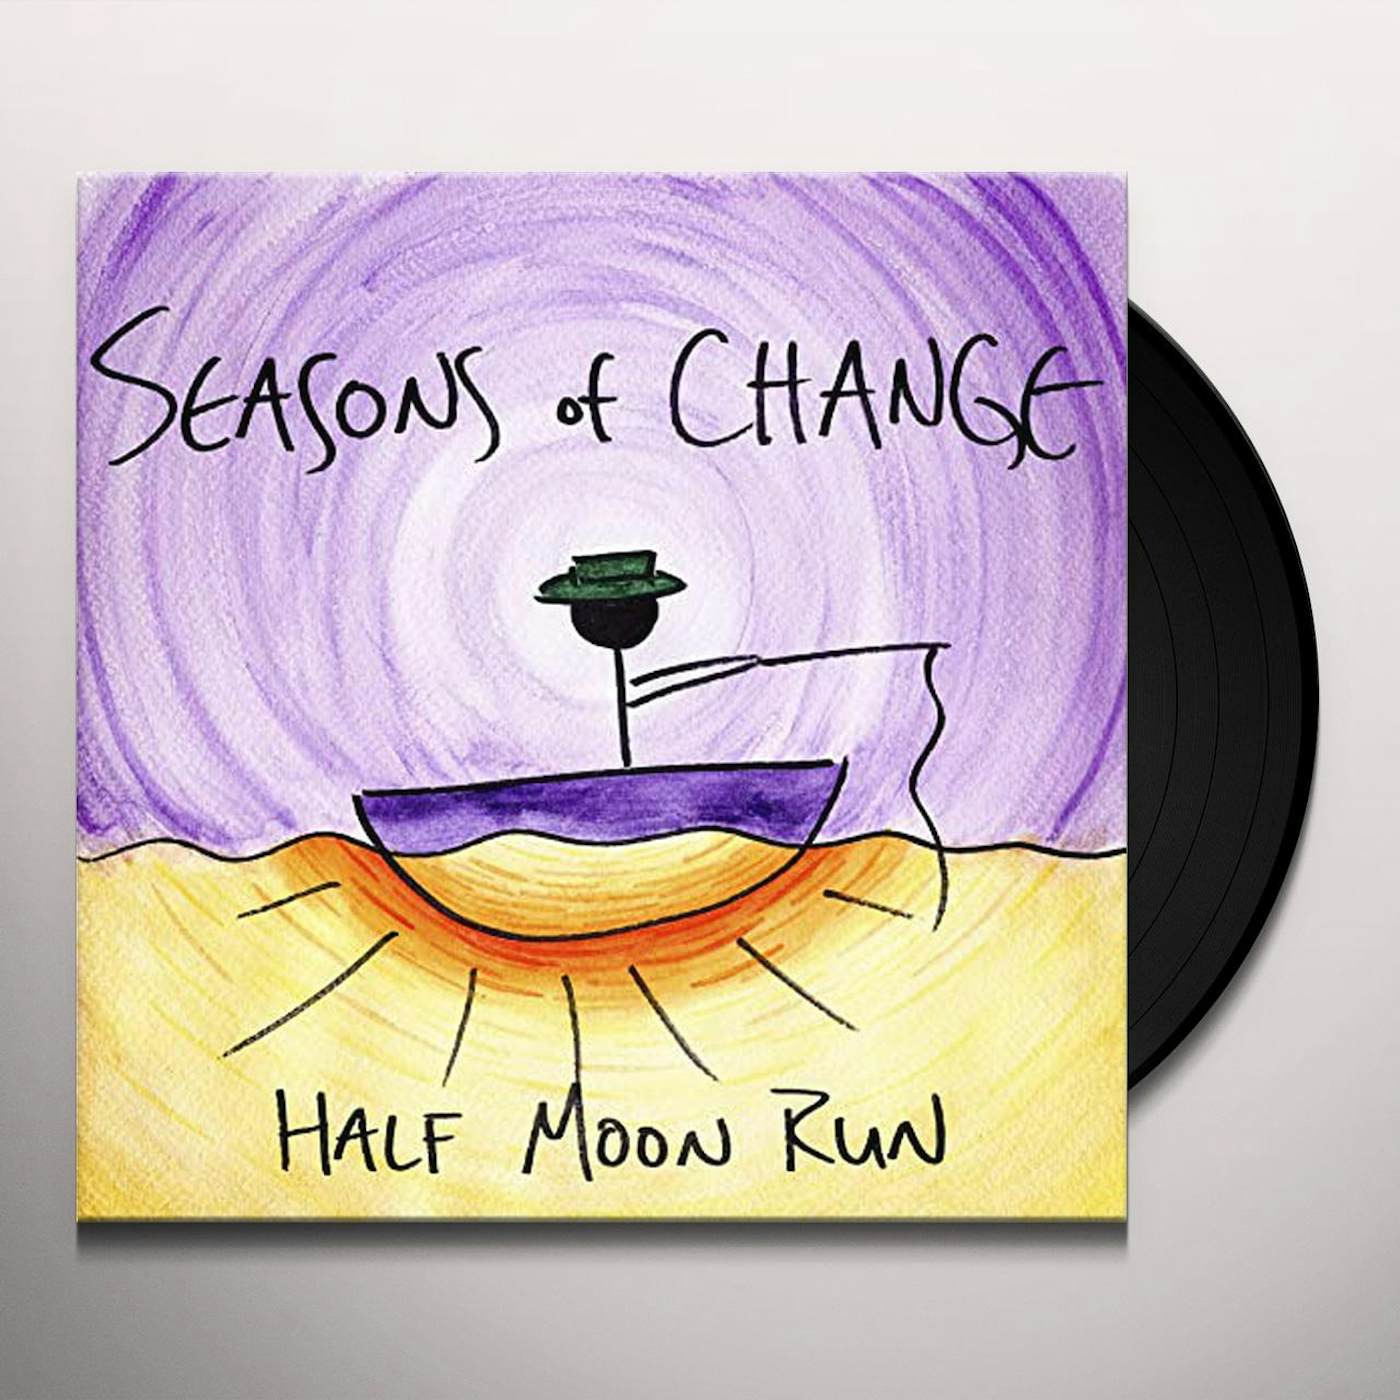 Half Moon Run Seasons of Change Vinyl Record